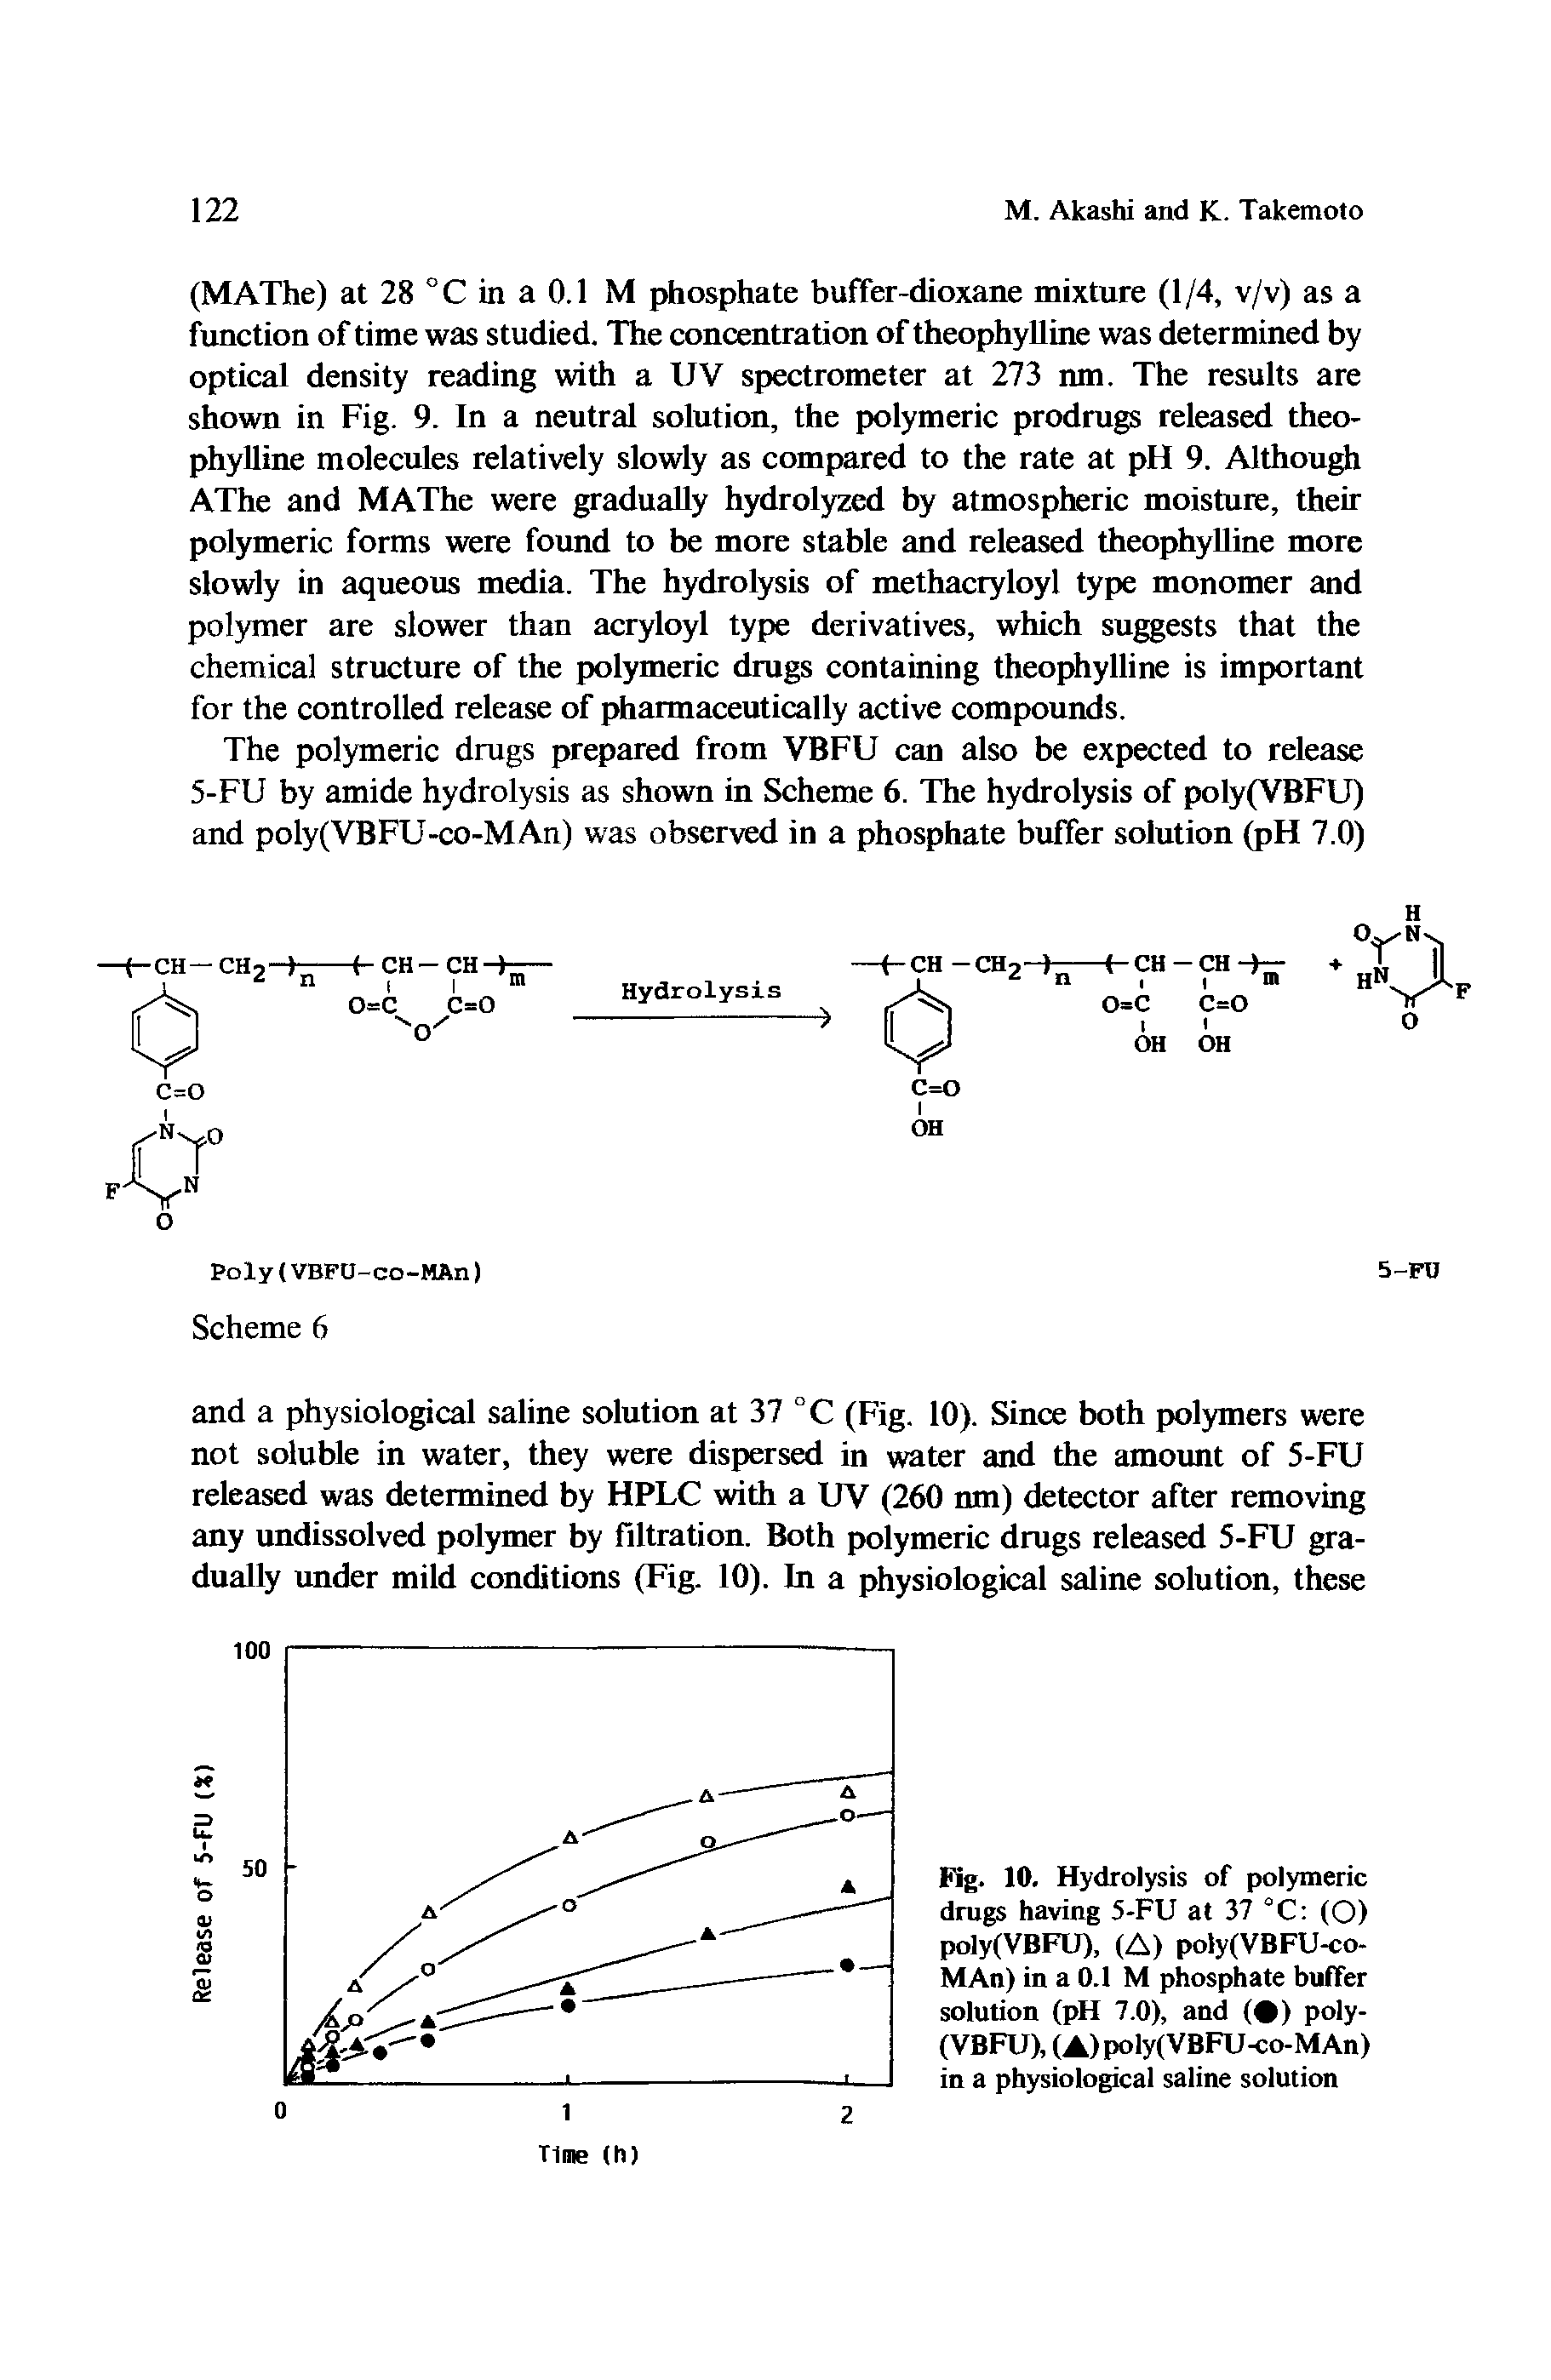 Fig. 10. Hydrolysis of polymeric drugs having 5-FU at 37 °C (O) poly(VBFU), (A) poly(VBFU-co-MAn) in a 0.1 M phosphate buffer solution (pH 7.0), and ( ) poly-(VBFU), (A)poly(VBFU-co-MAn) in a physiological saline solution...